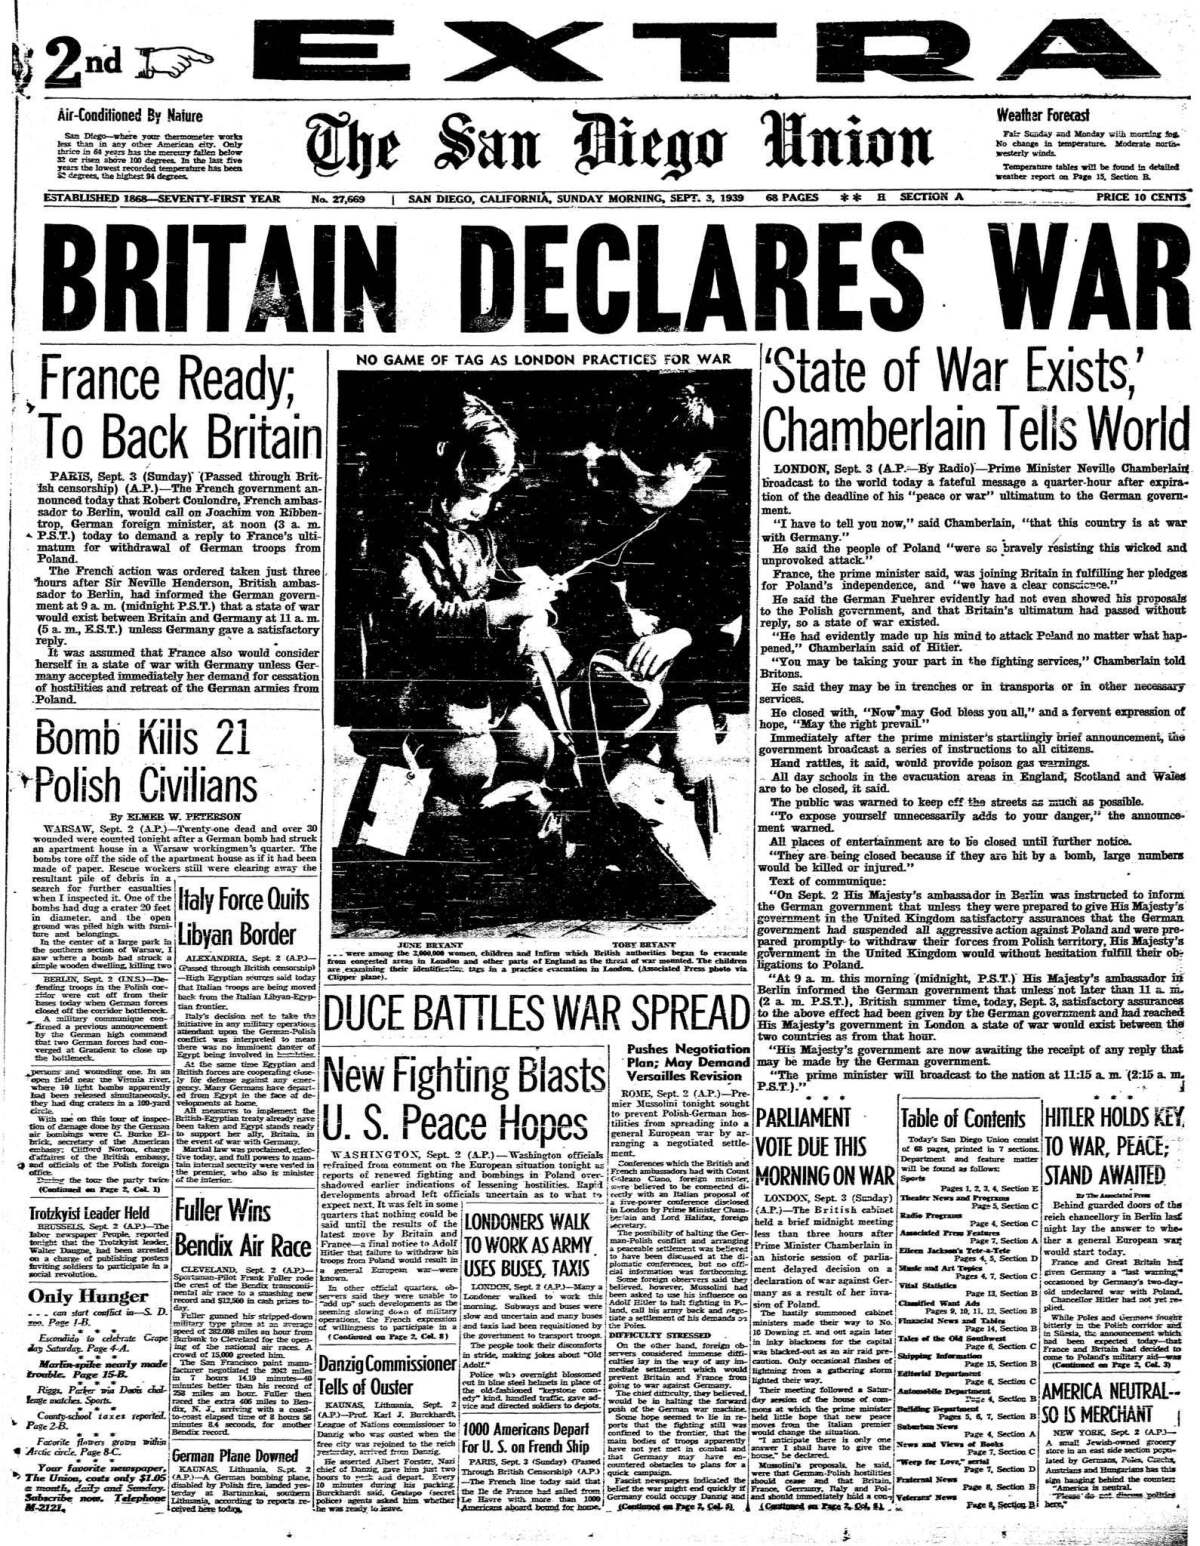 September 3, 1939: World War II begins - The San Diego Union